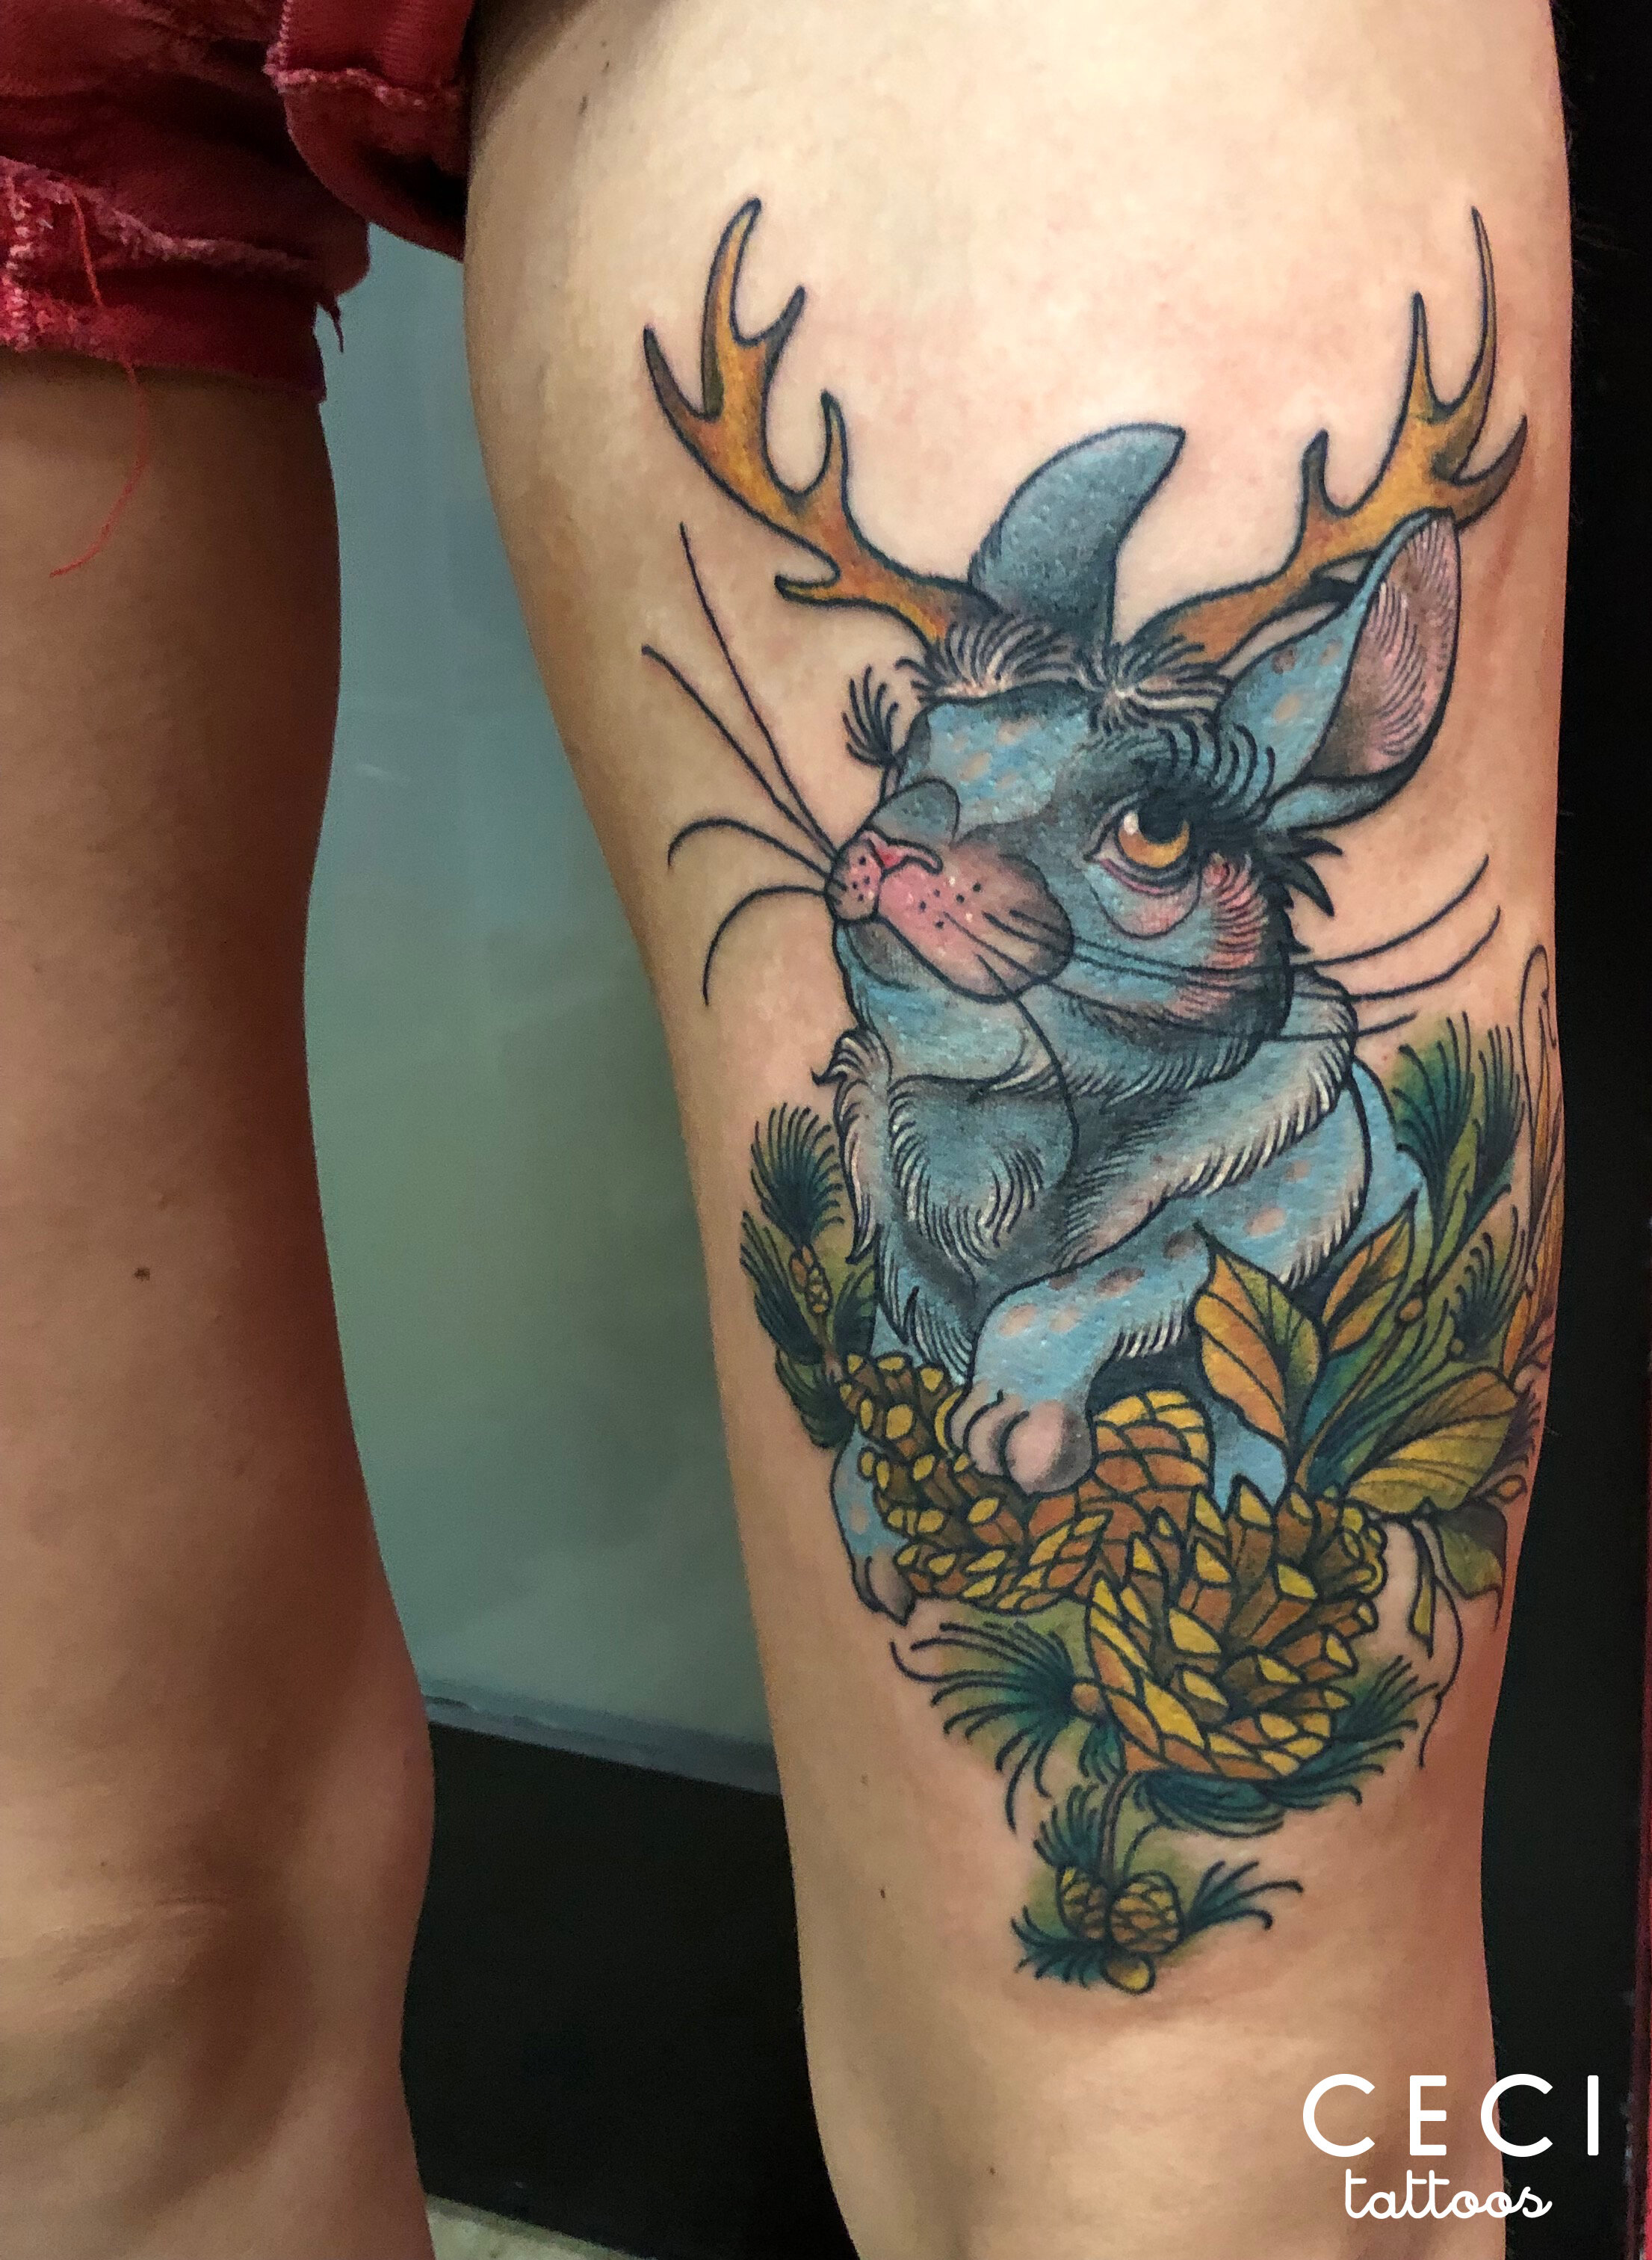 love it so much #tattoo #inked #jackalope #bunny #mythology #folklore ... |  TikTok